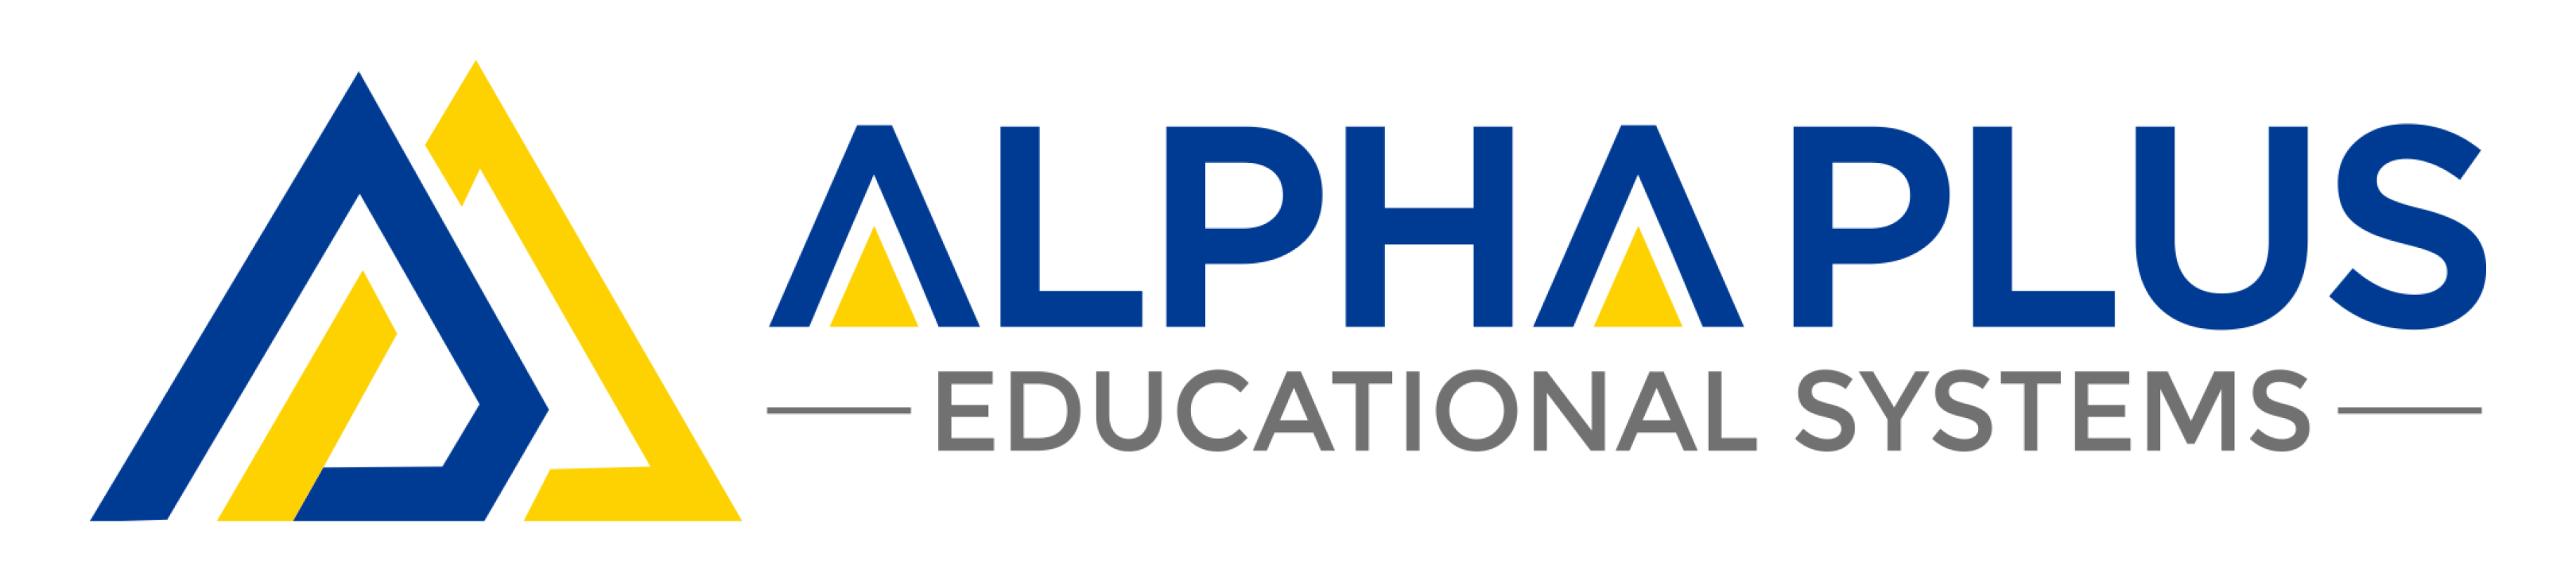 Alpha Plus logo wide 2b